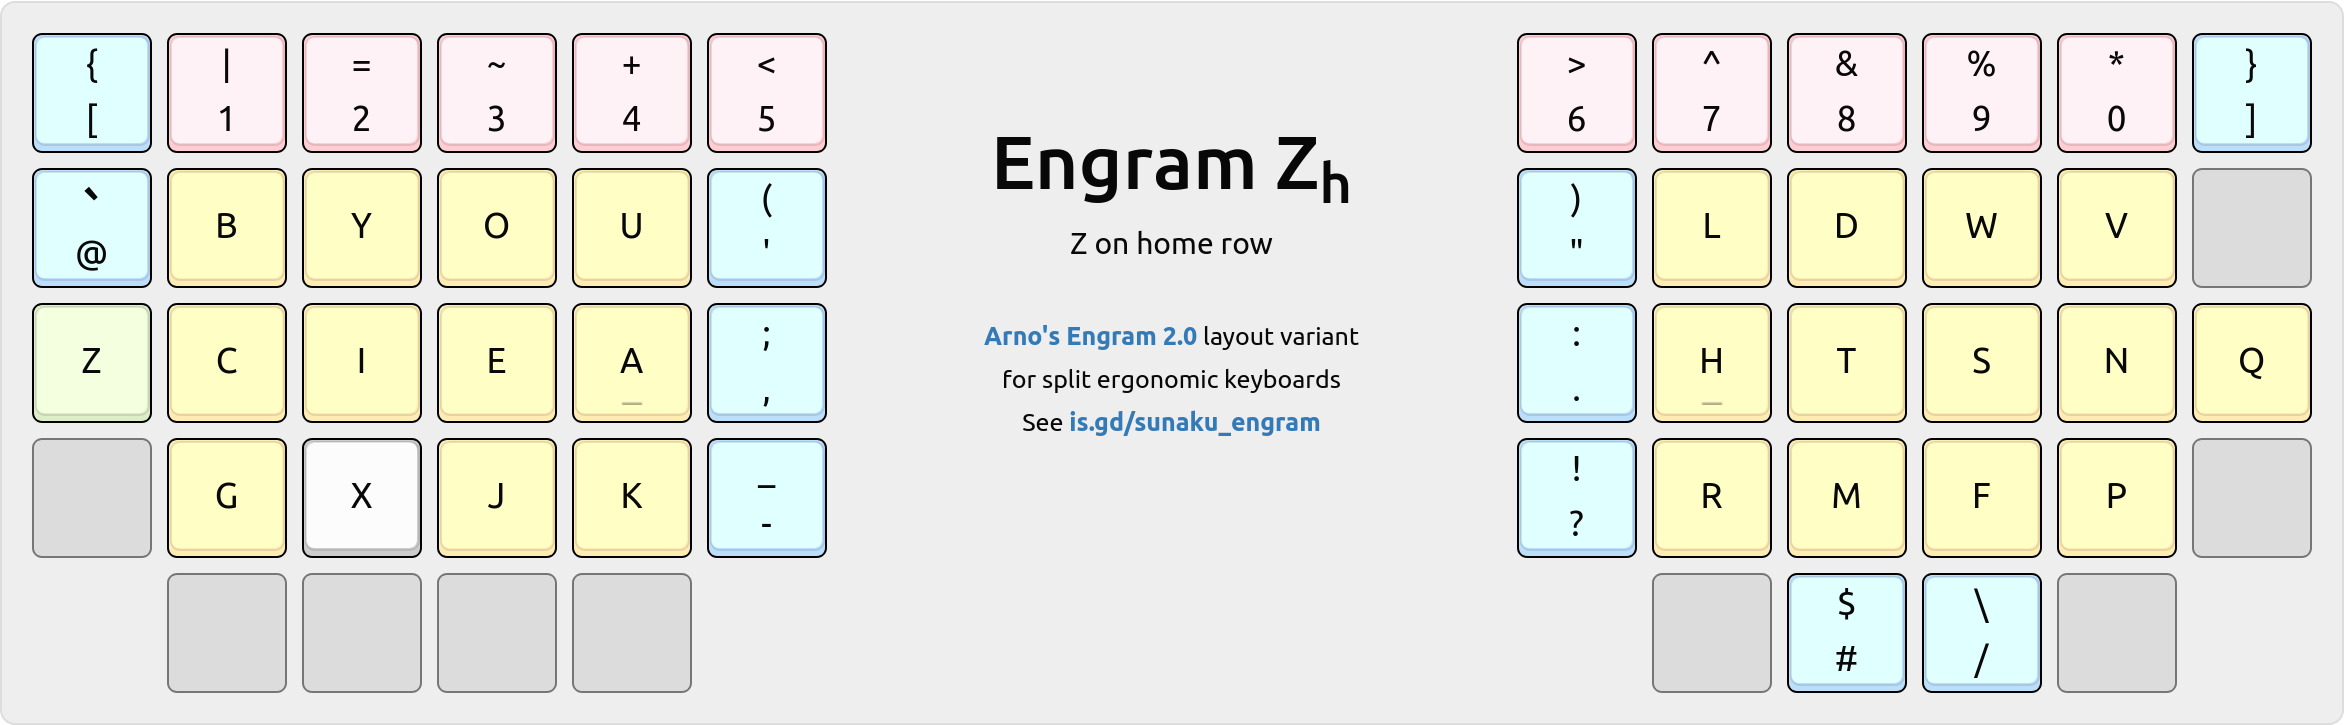 Engram-Zh variant